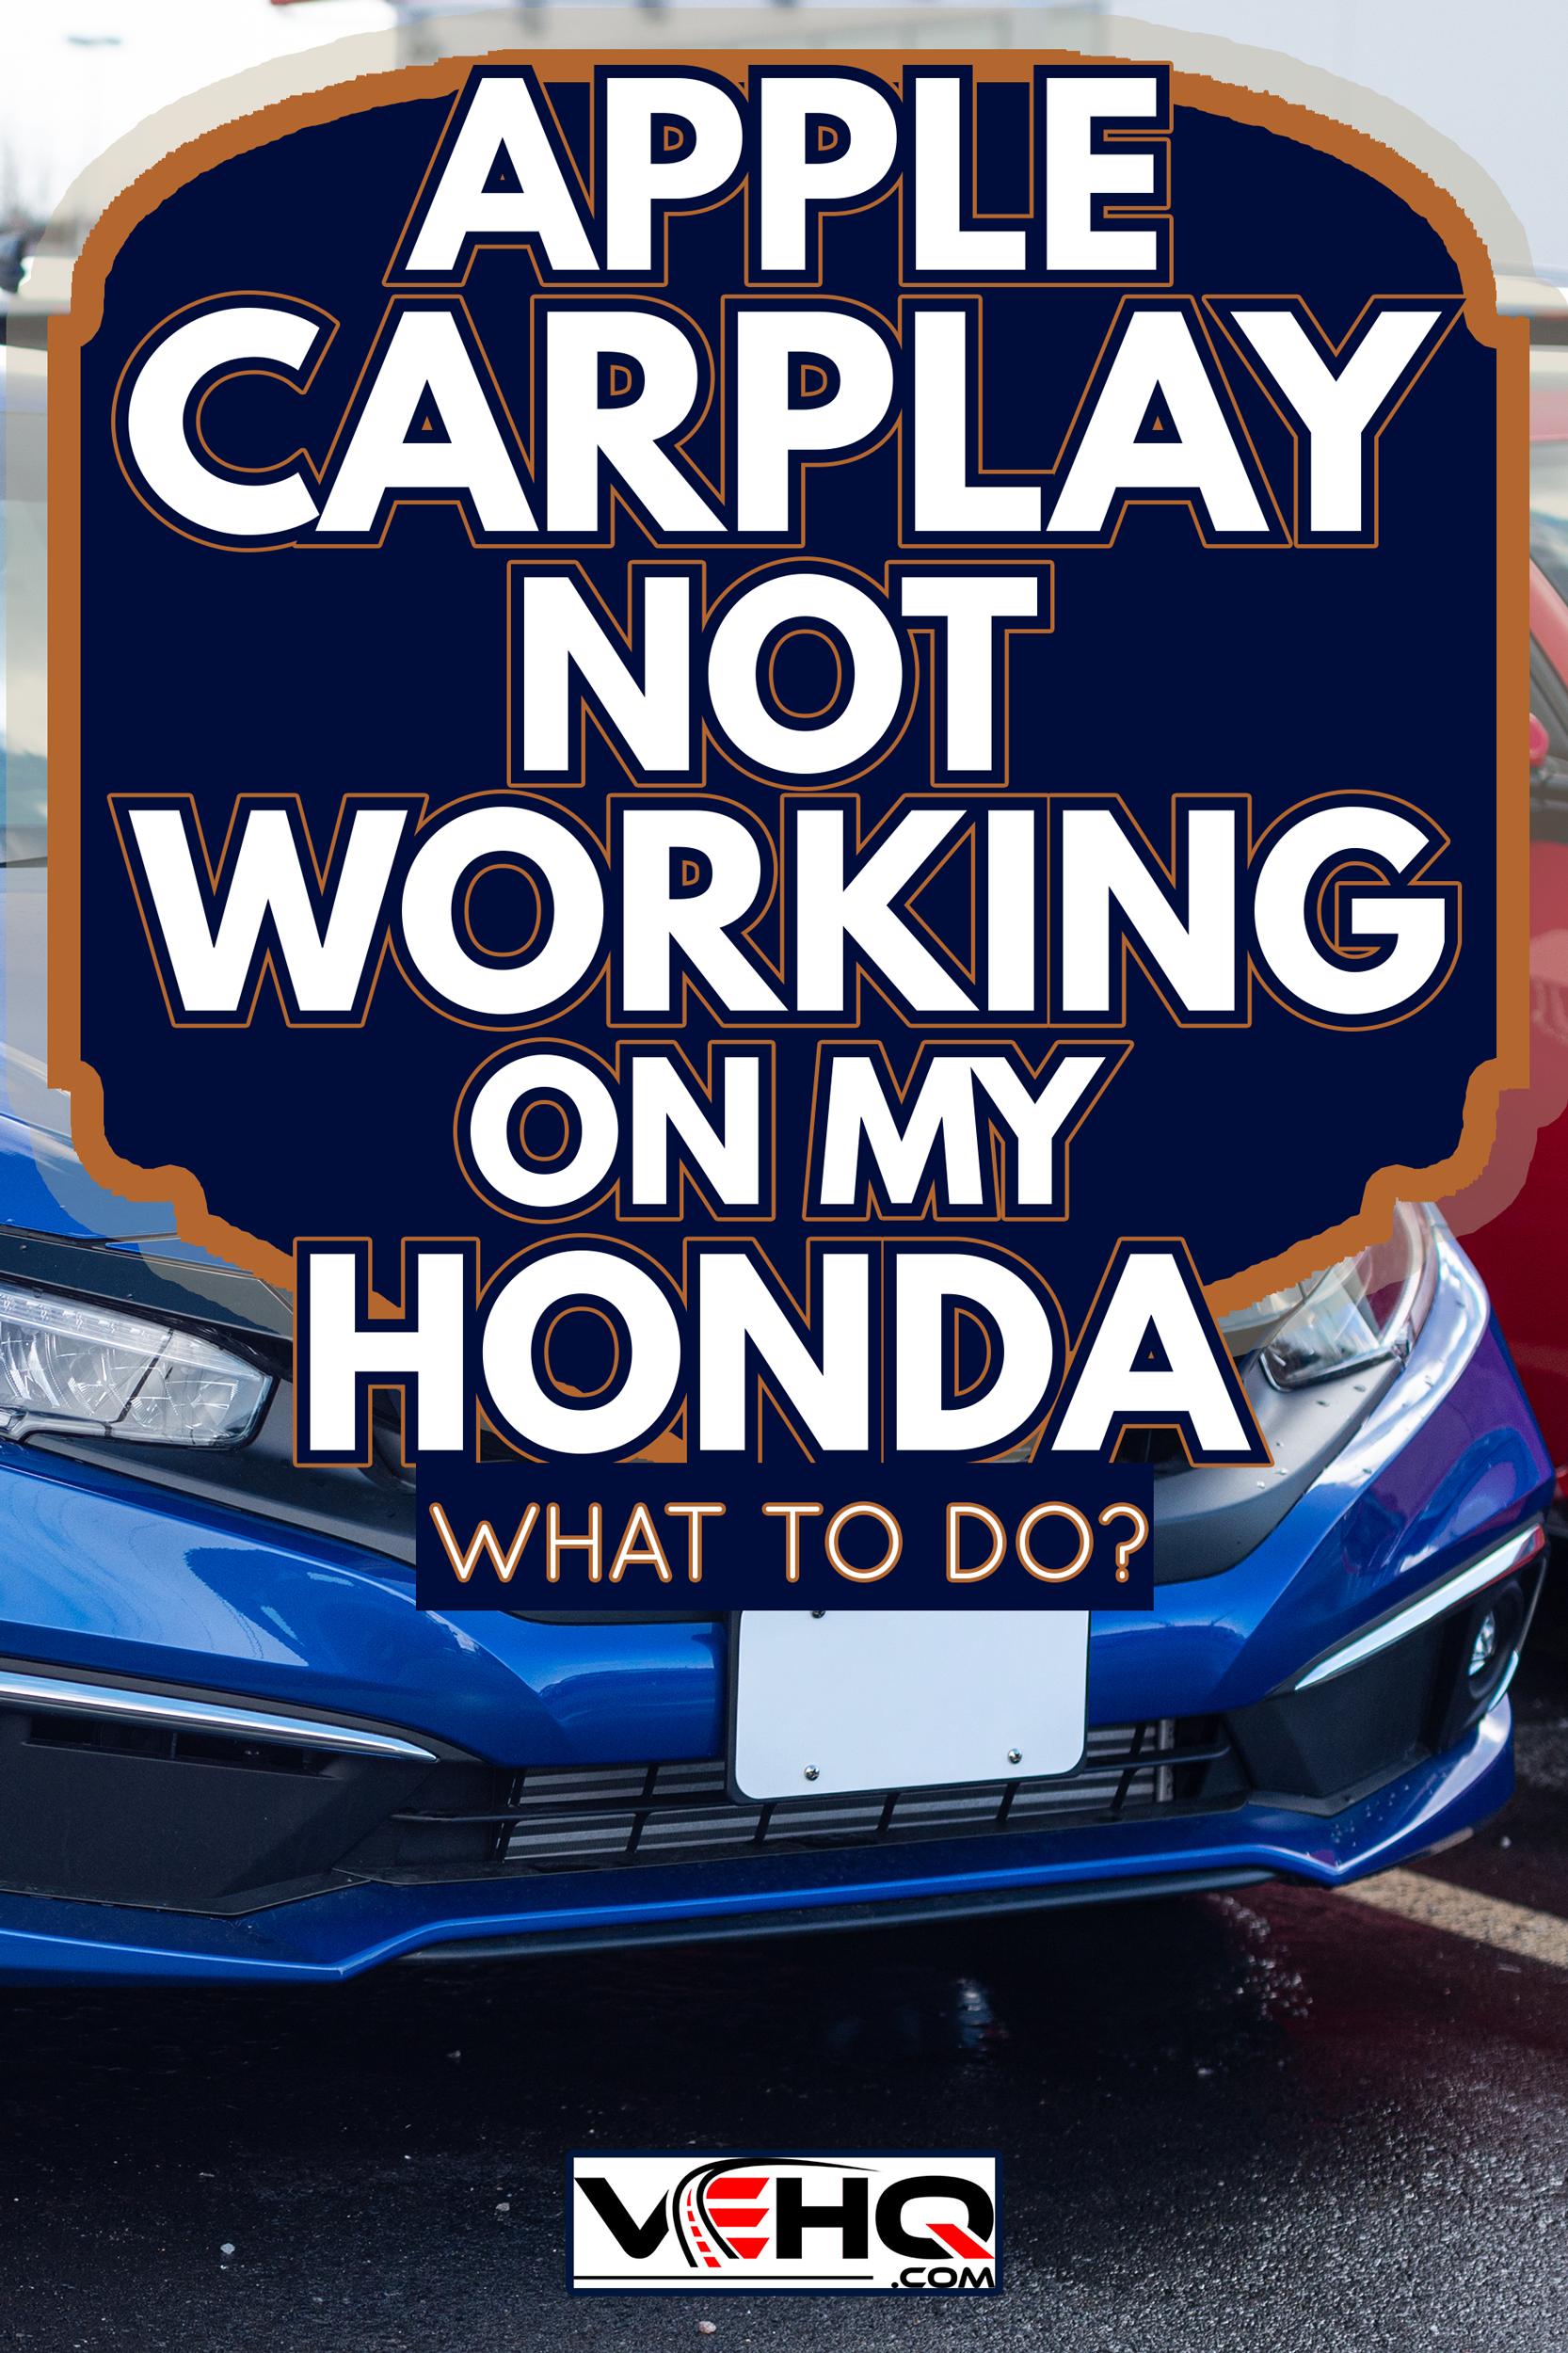 A 2020 Honda Civic sedan at a dealership. - Apple CarPlay Not Working On My Honda - What To Do